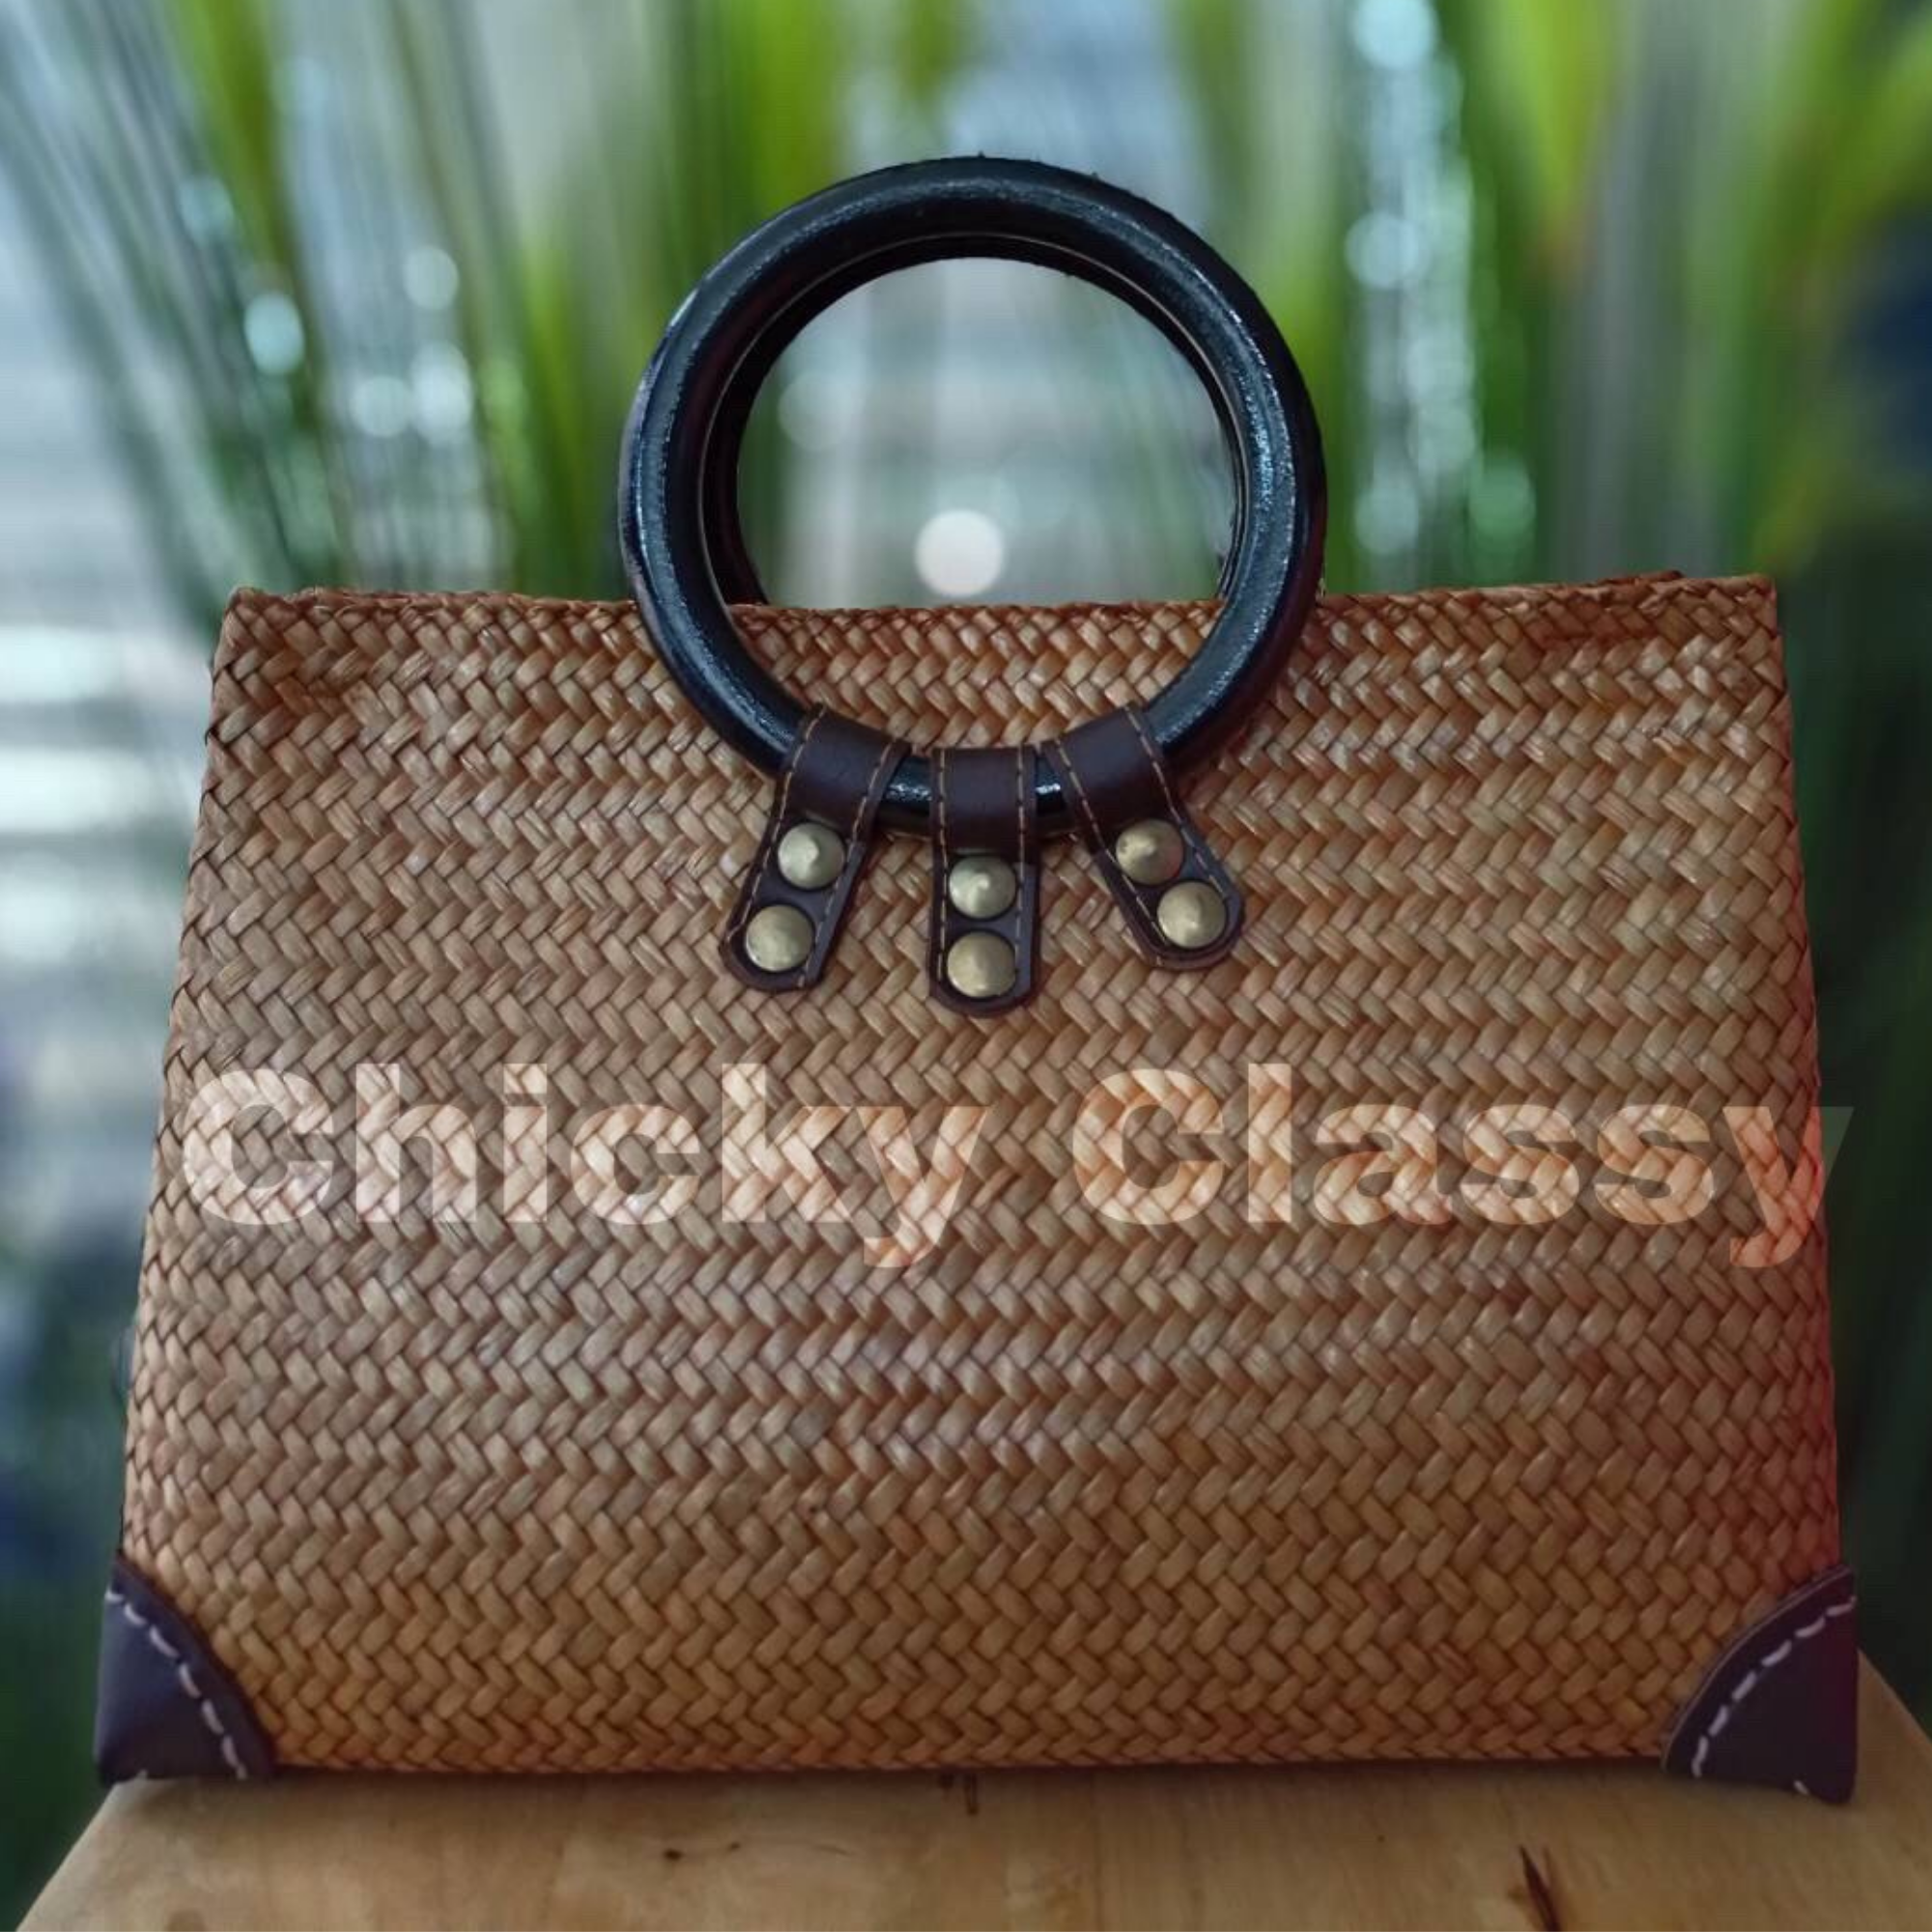 Chicky Classy friendly home made bag